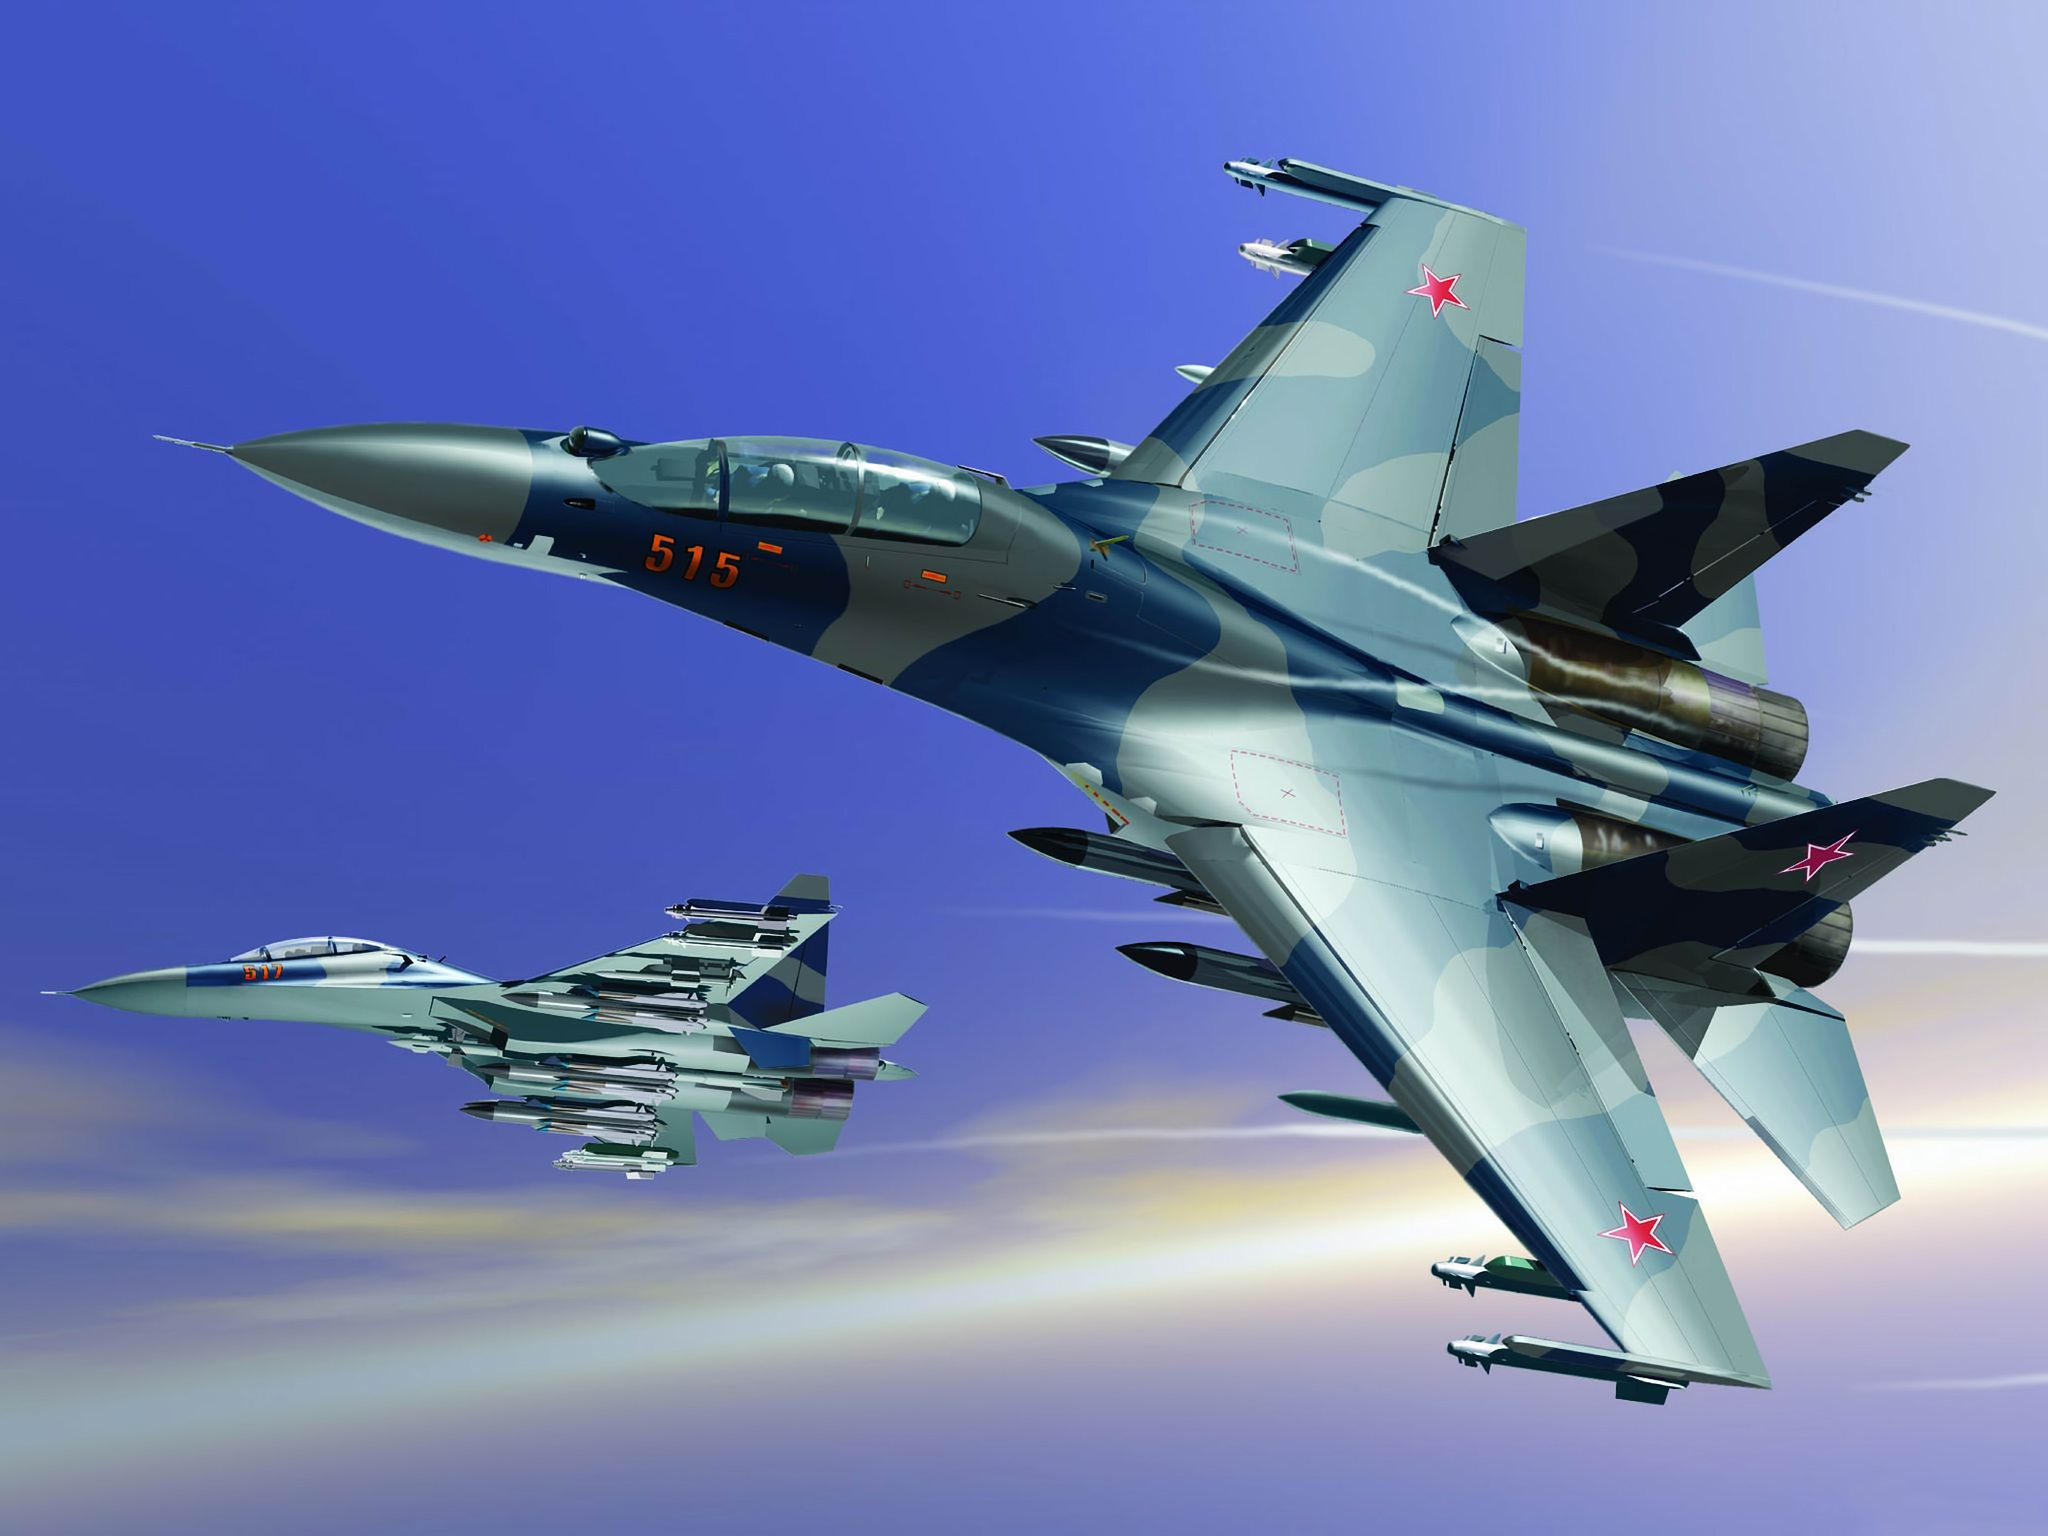 http://warwall.ru/Arts/1/Wallpaper_3262_Aviation_Fighter_Su-30MK.jpg